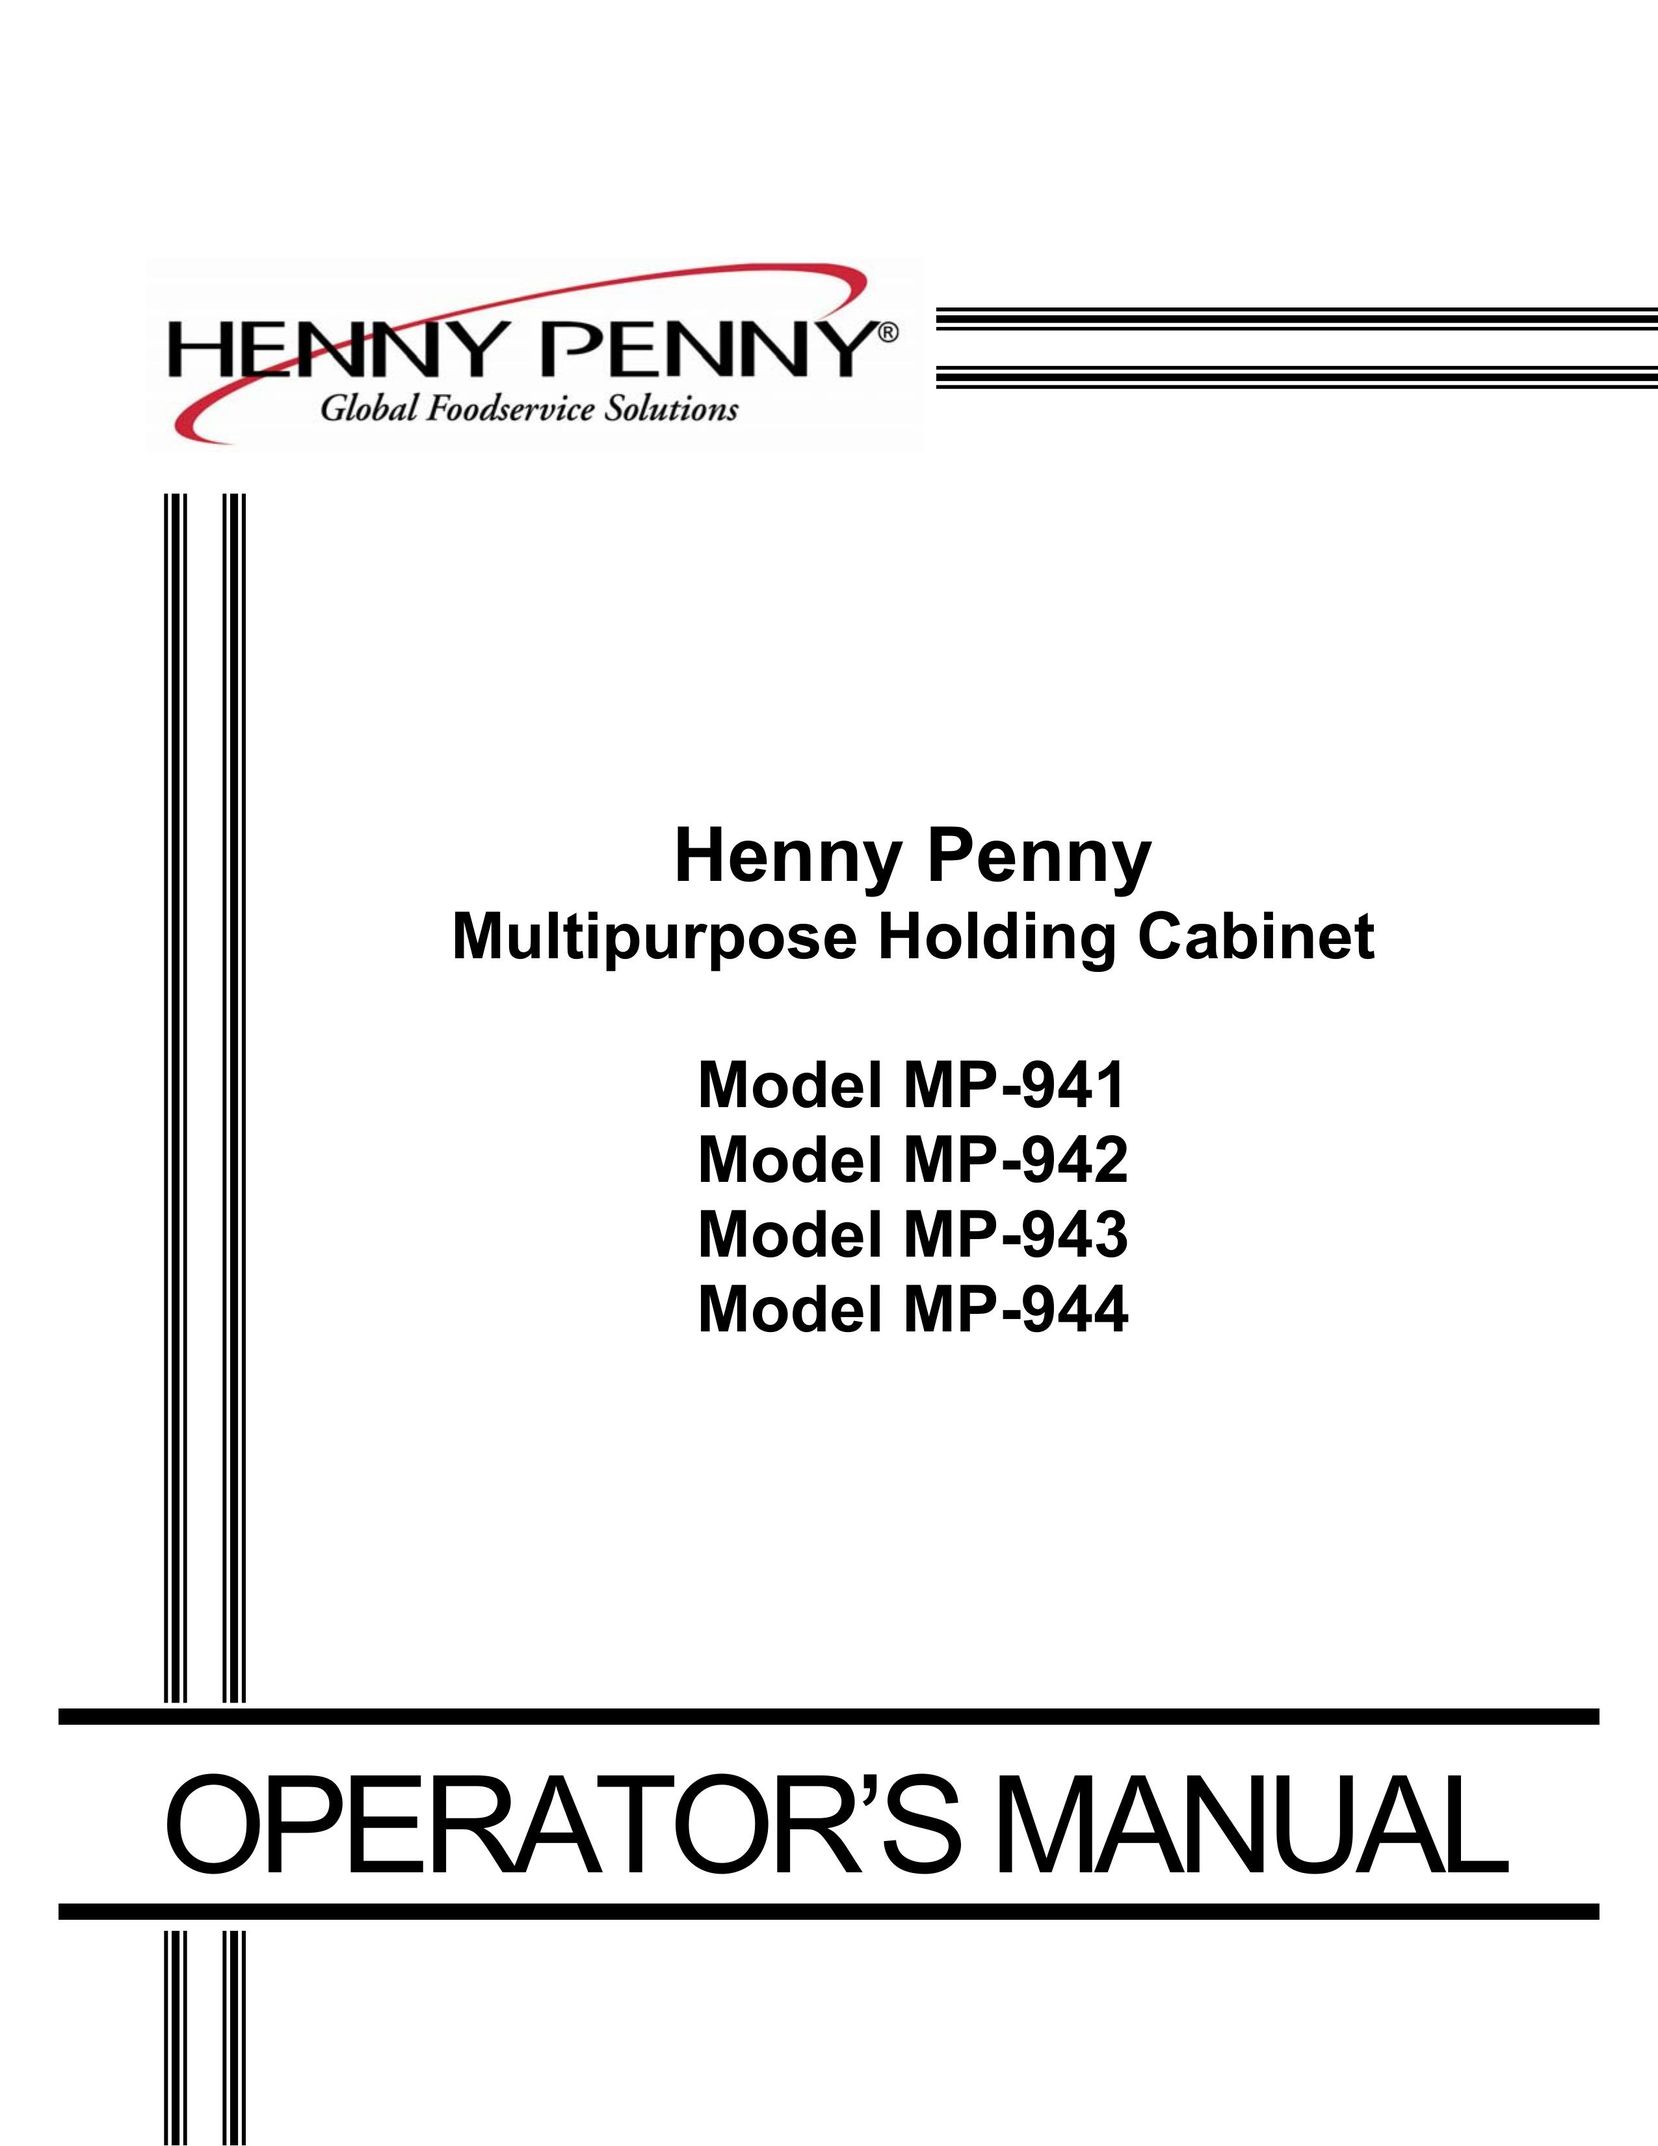 Henny Penny MP-943 Food Warmer User Manual